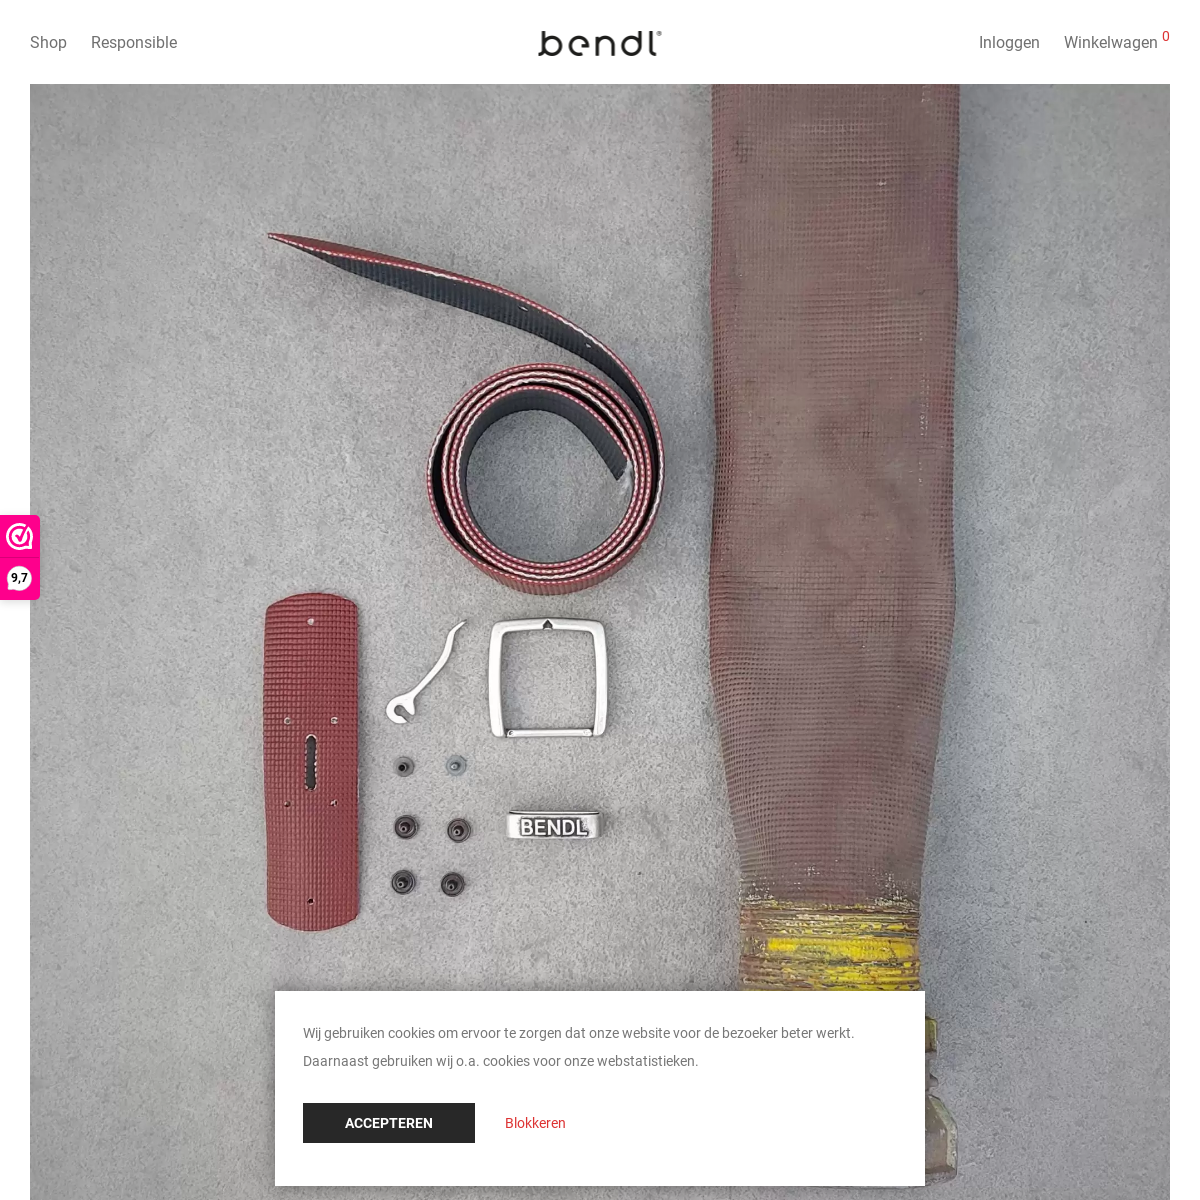 Bendl - Responsible Belts homepage